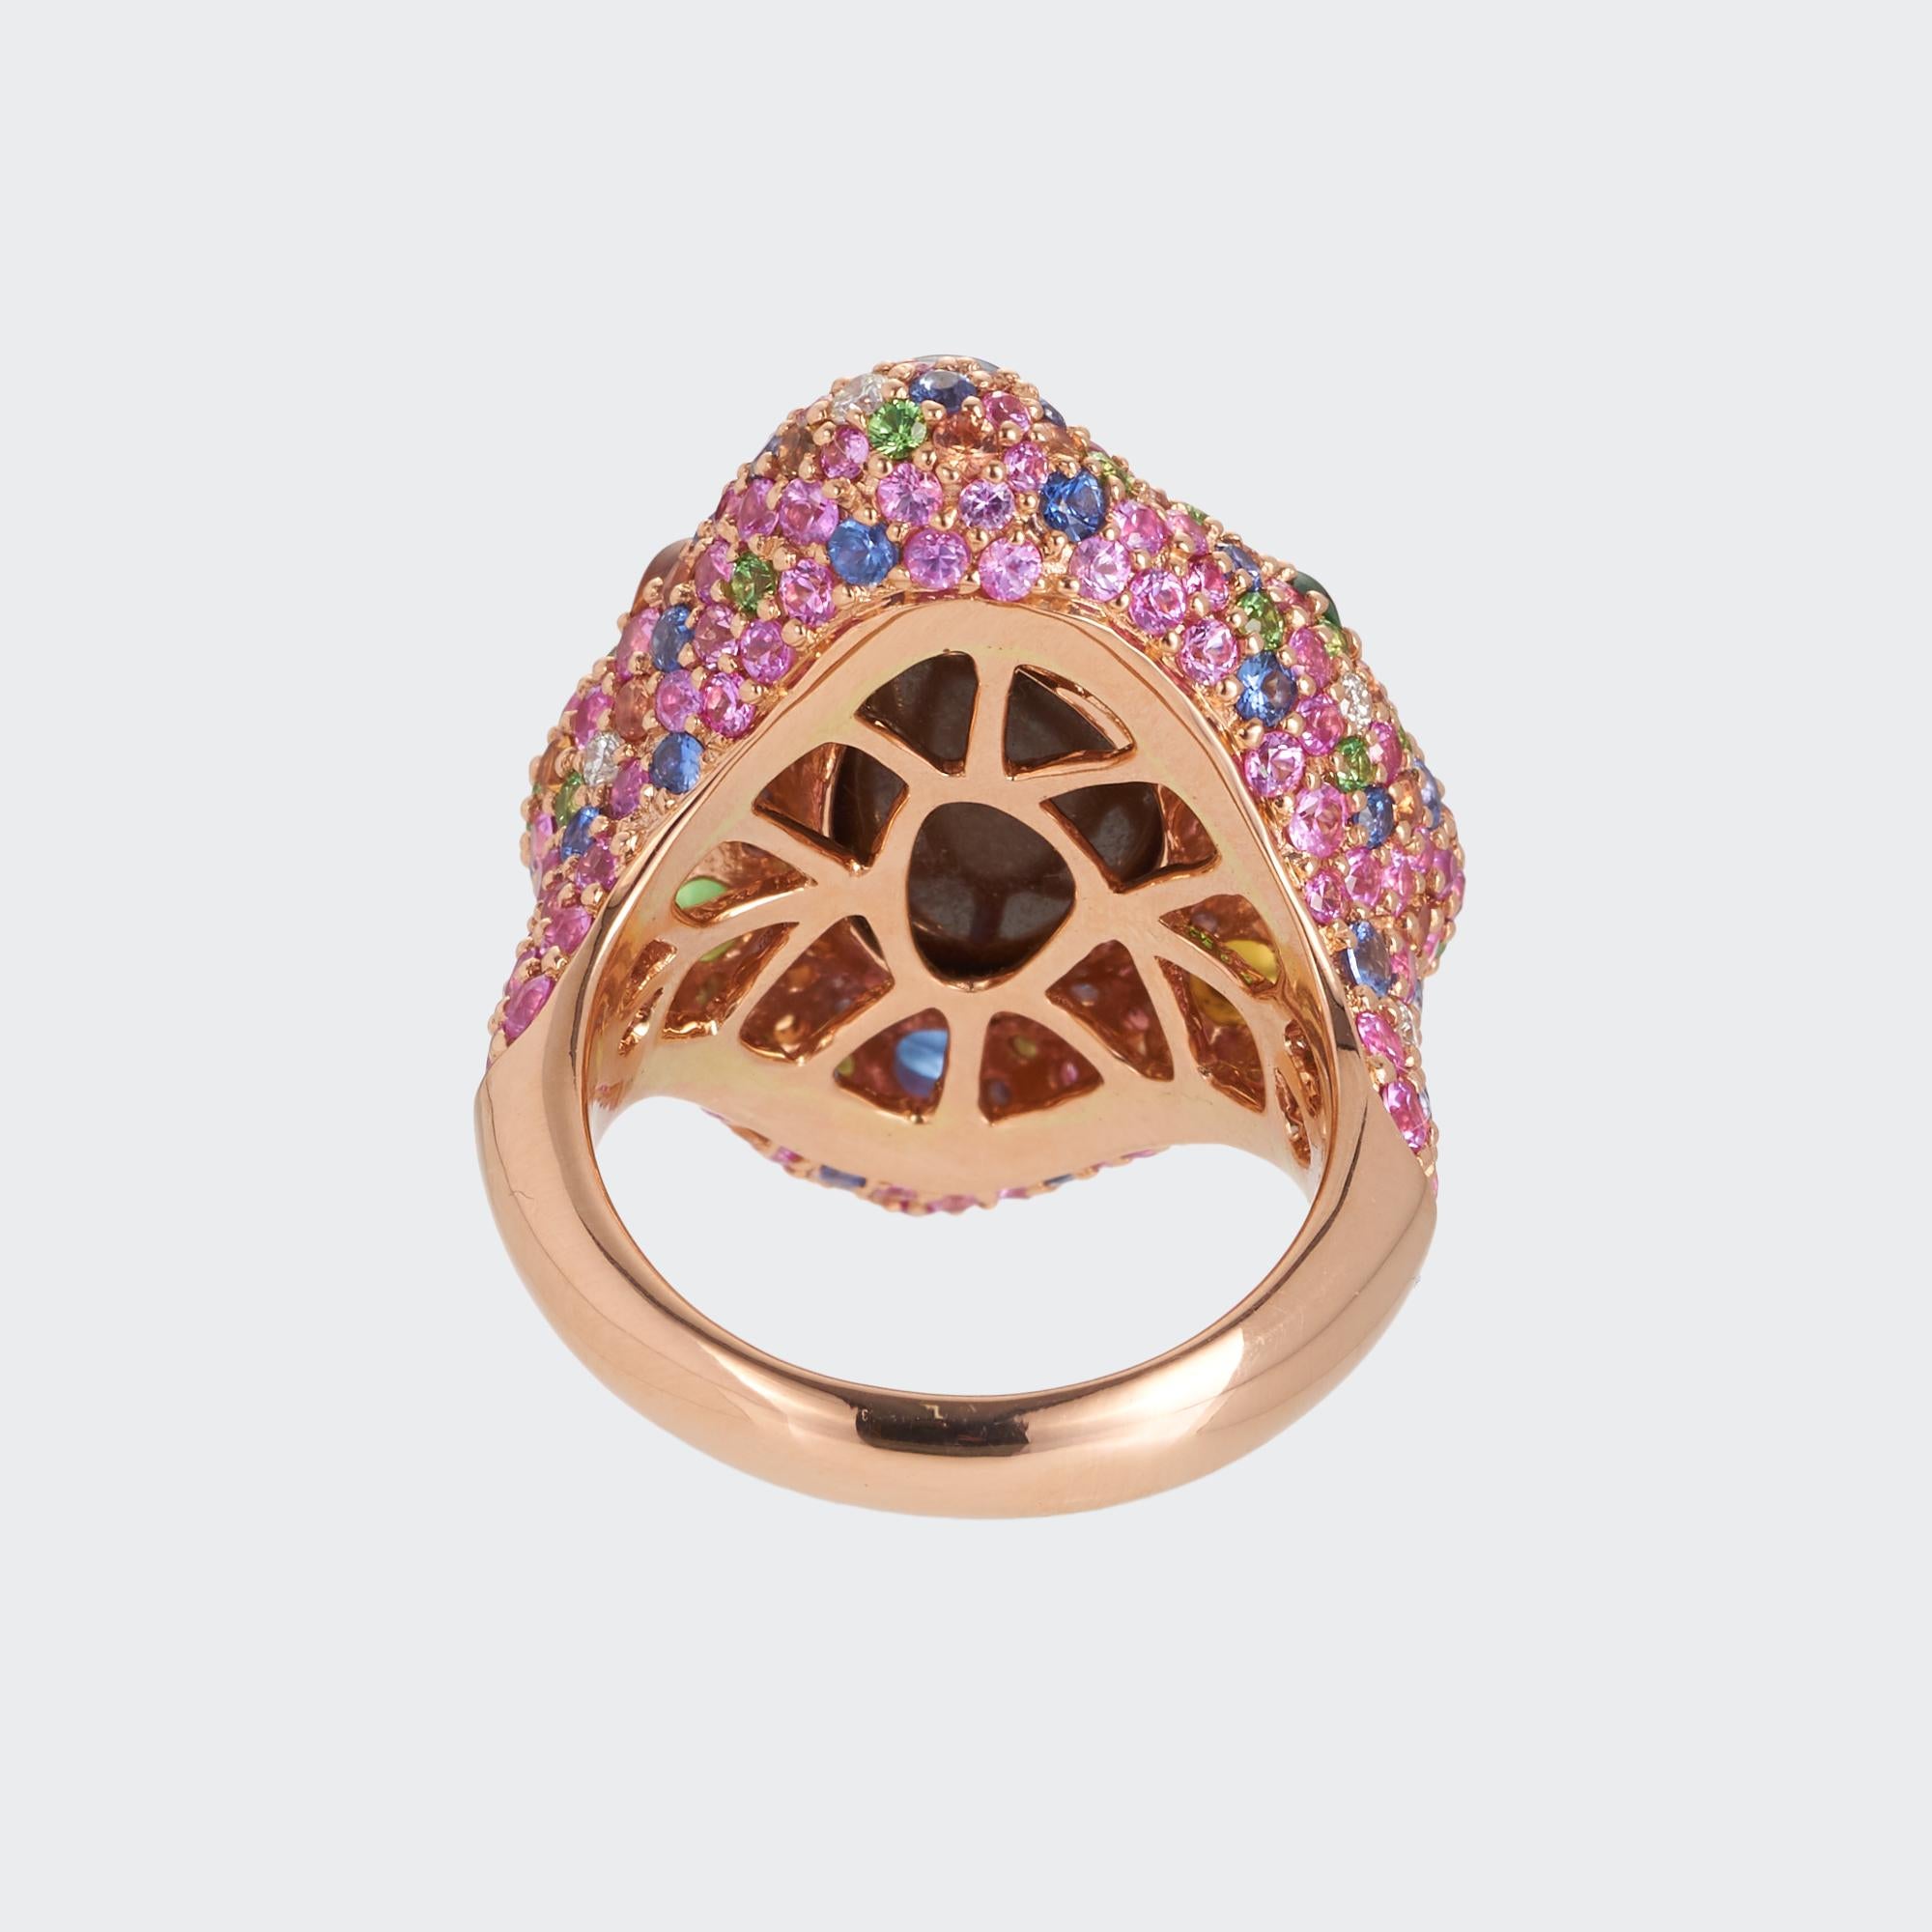 Women's Margot McKinney 18 Karat Rose Gold Ring with Opal, Pink Sapphire, and Tsavorite